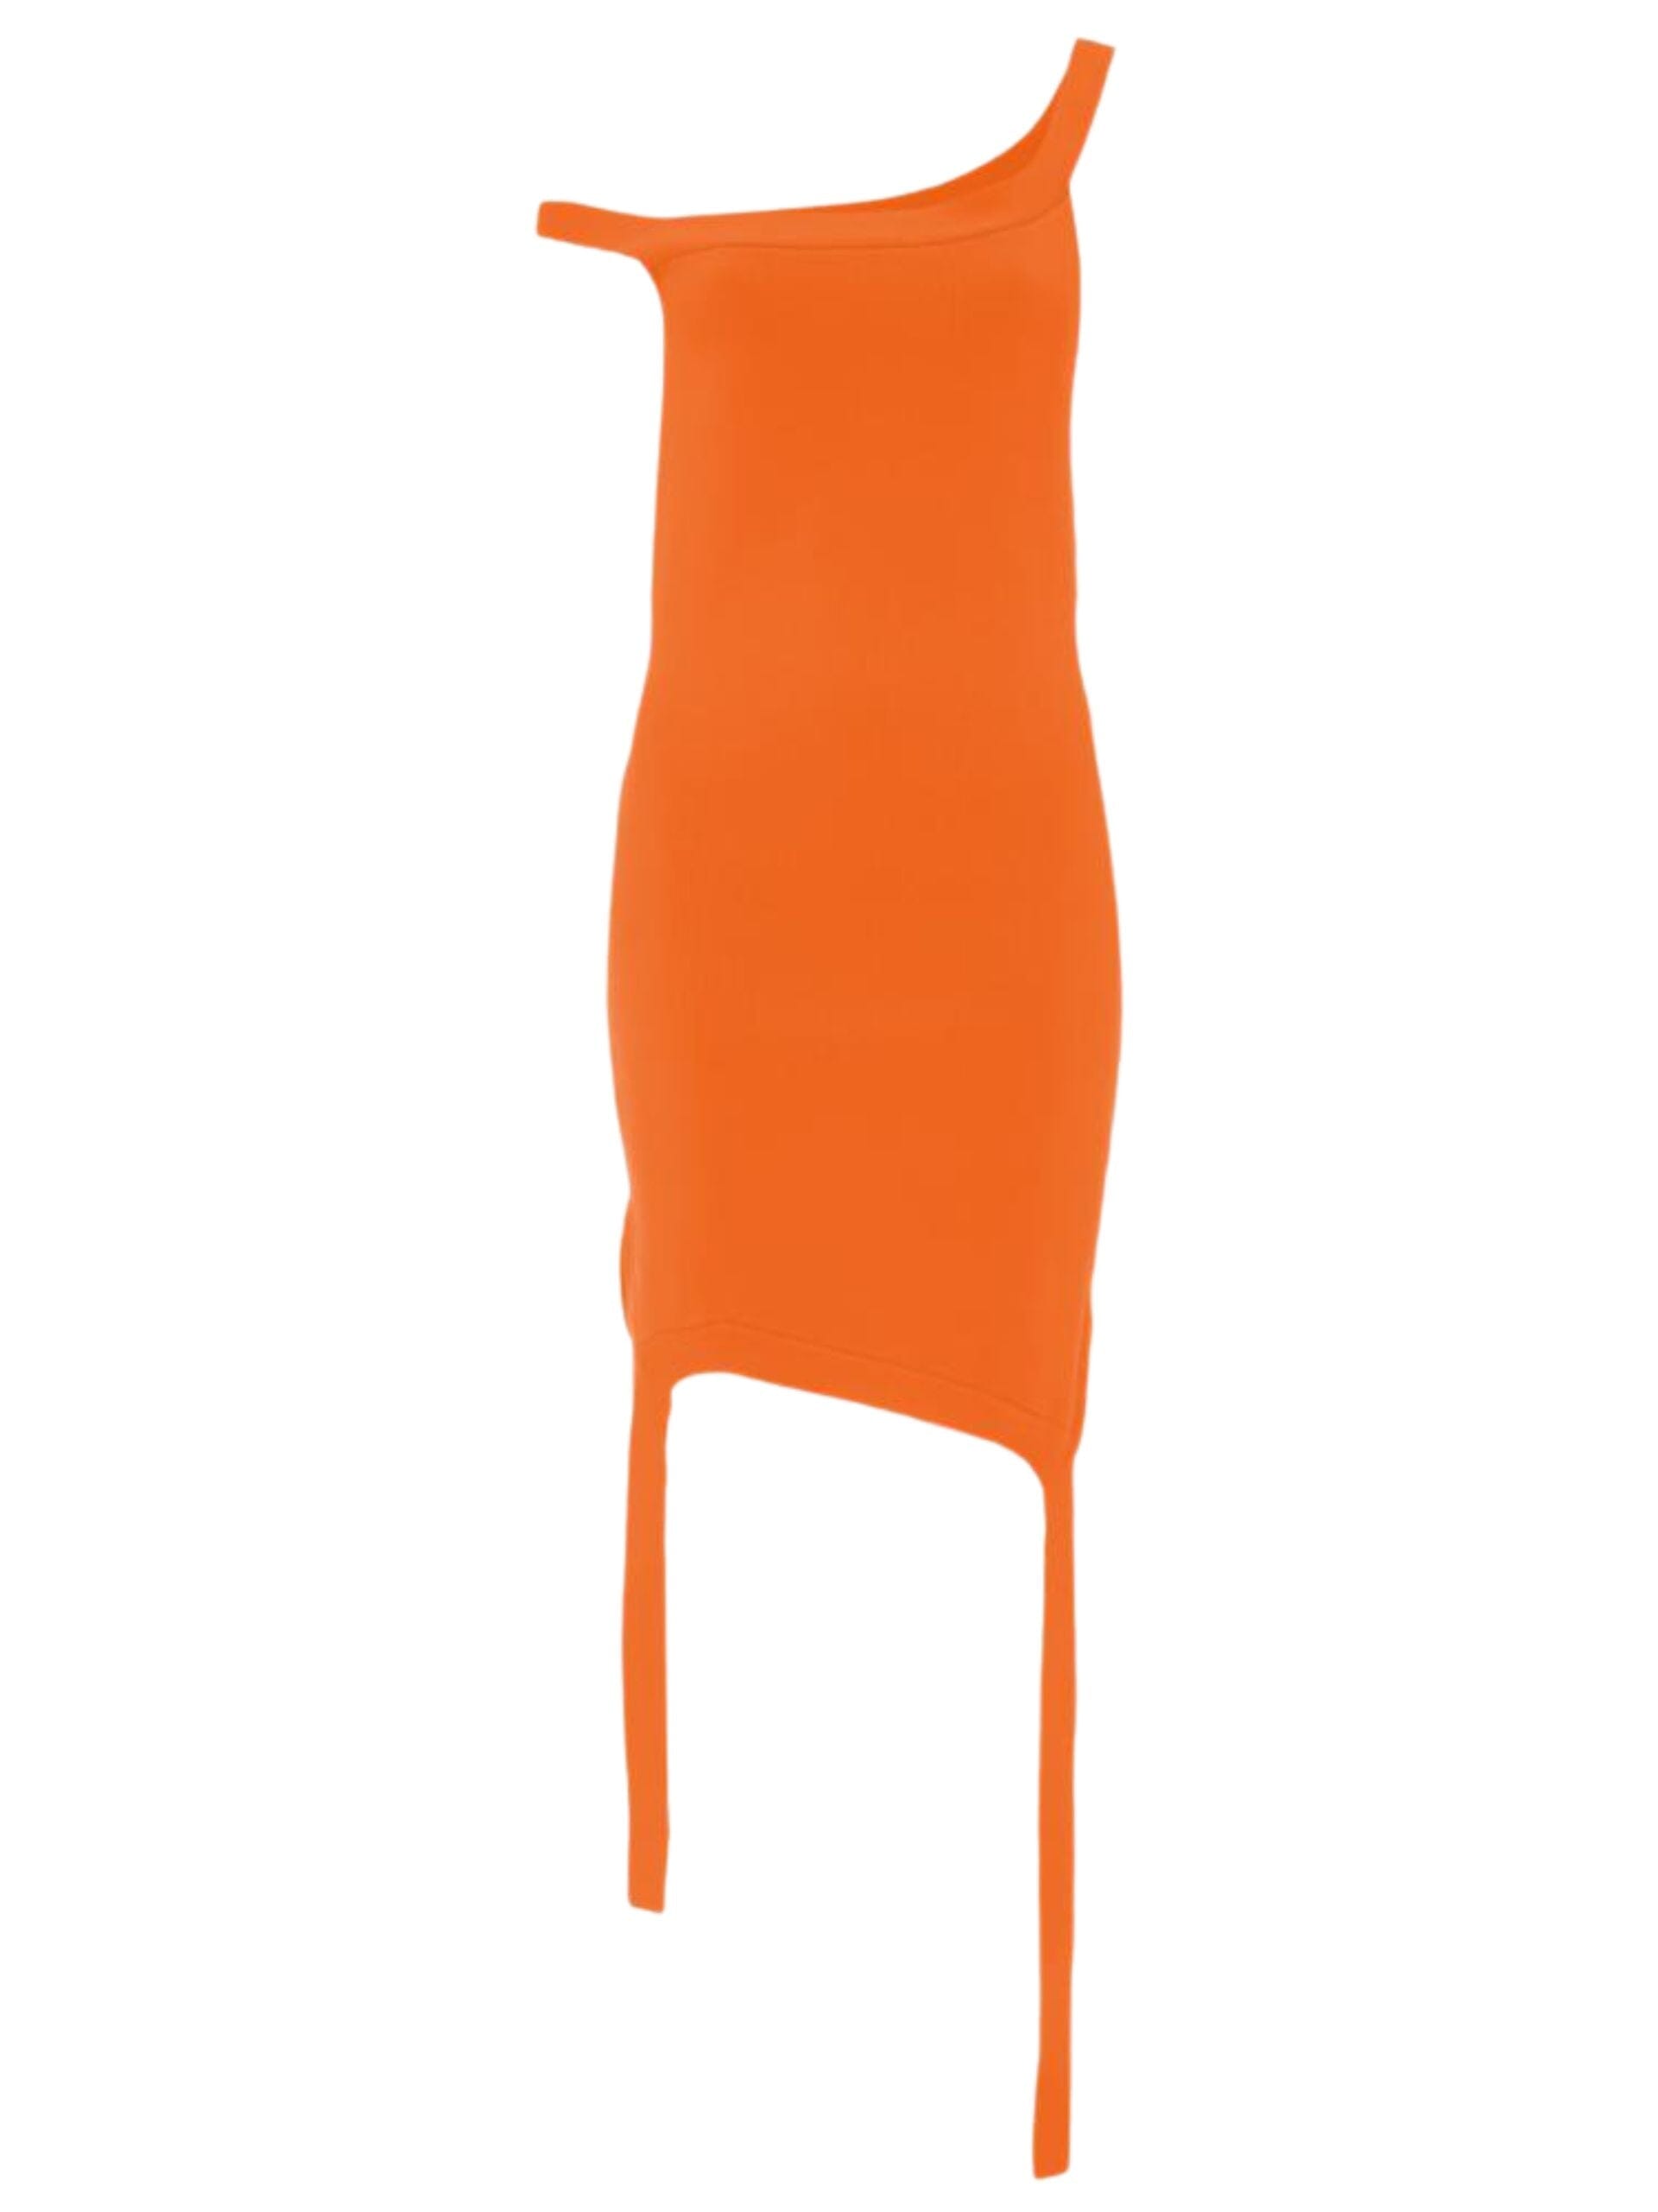 Deconstructed Dress / Orange Womens JW Anderson 